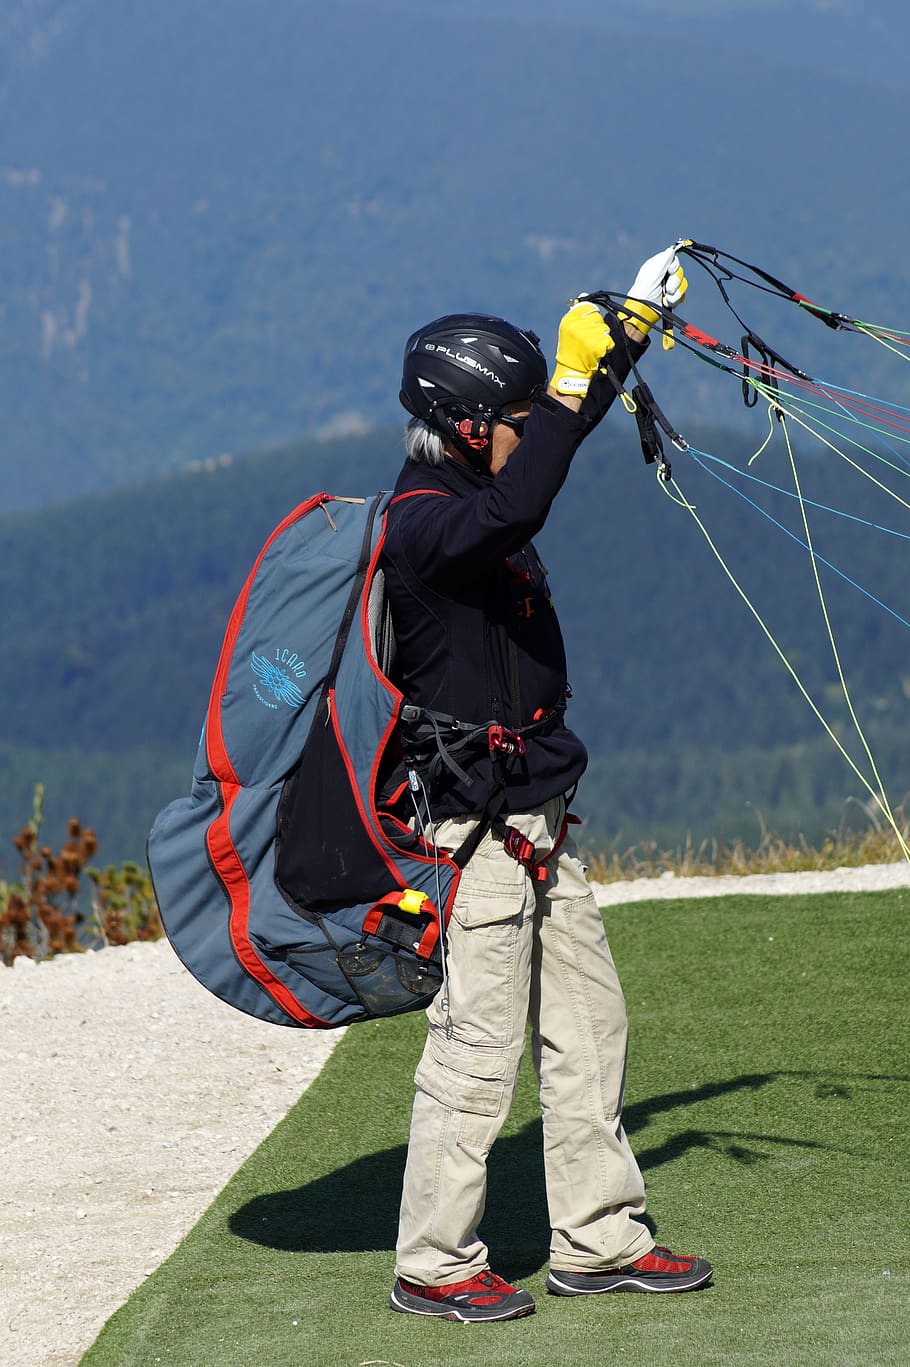 paraglider, paragliding, equipment, flying, dom, blue, sport, adventurer, hobby, mountains